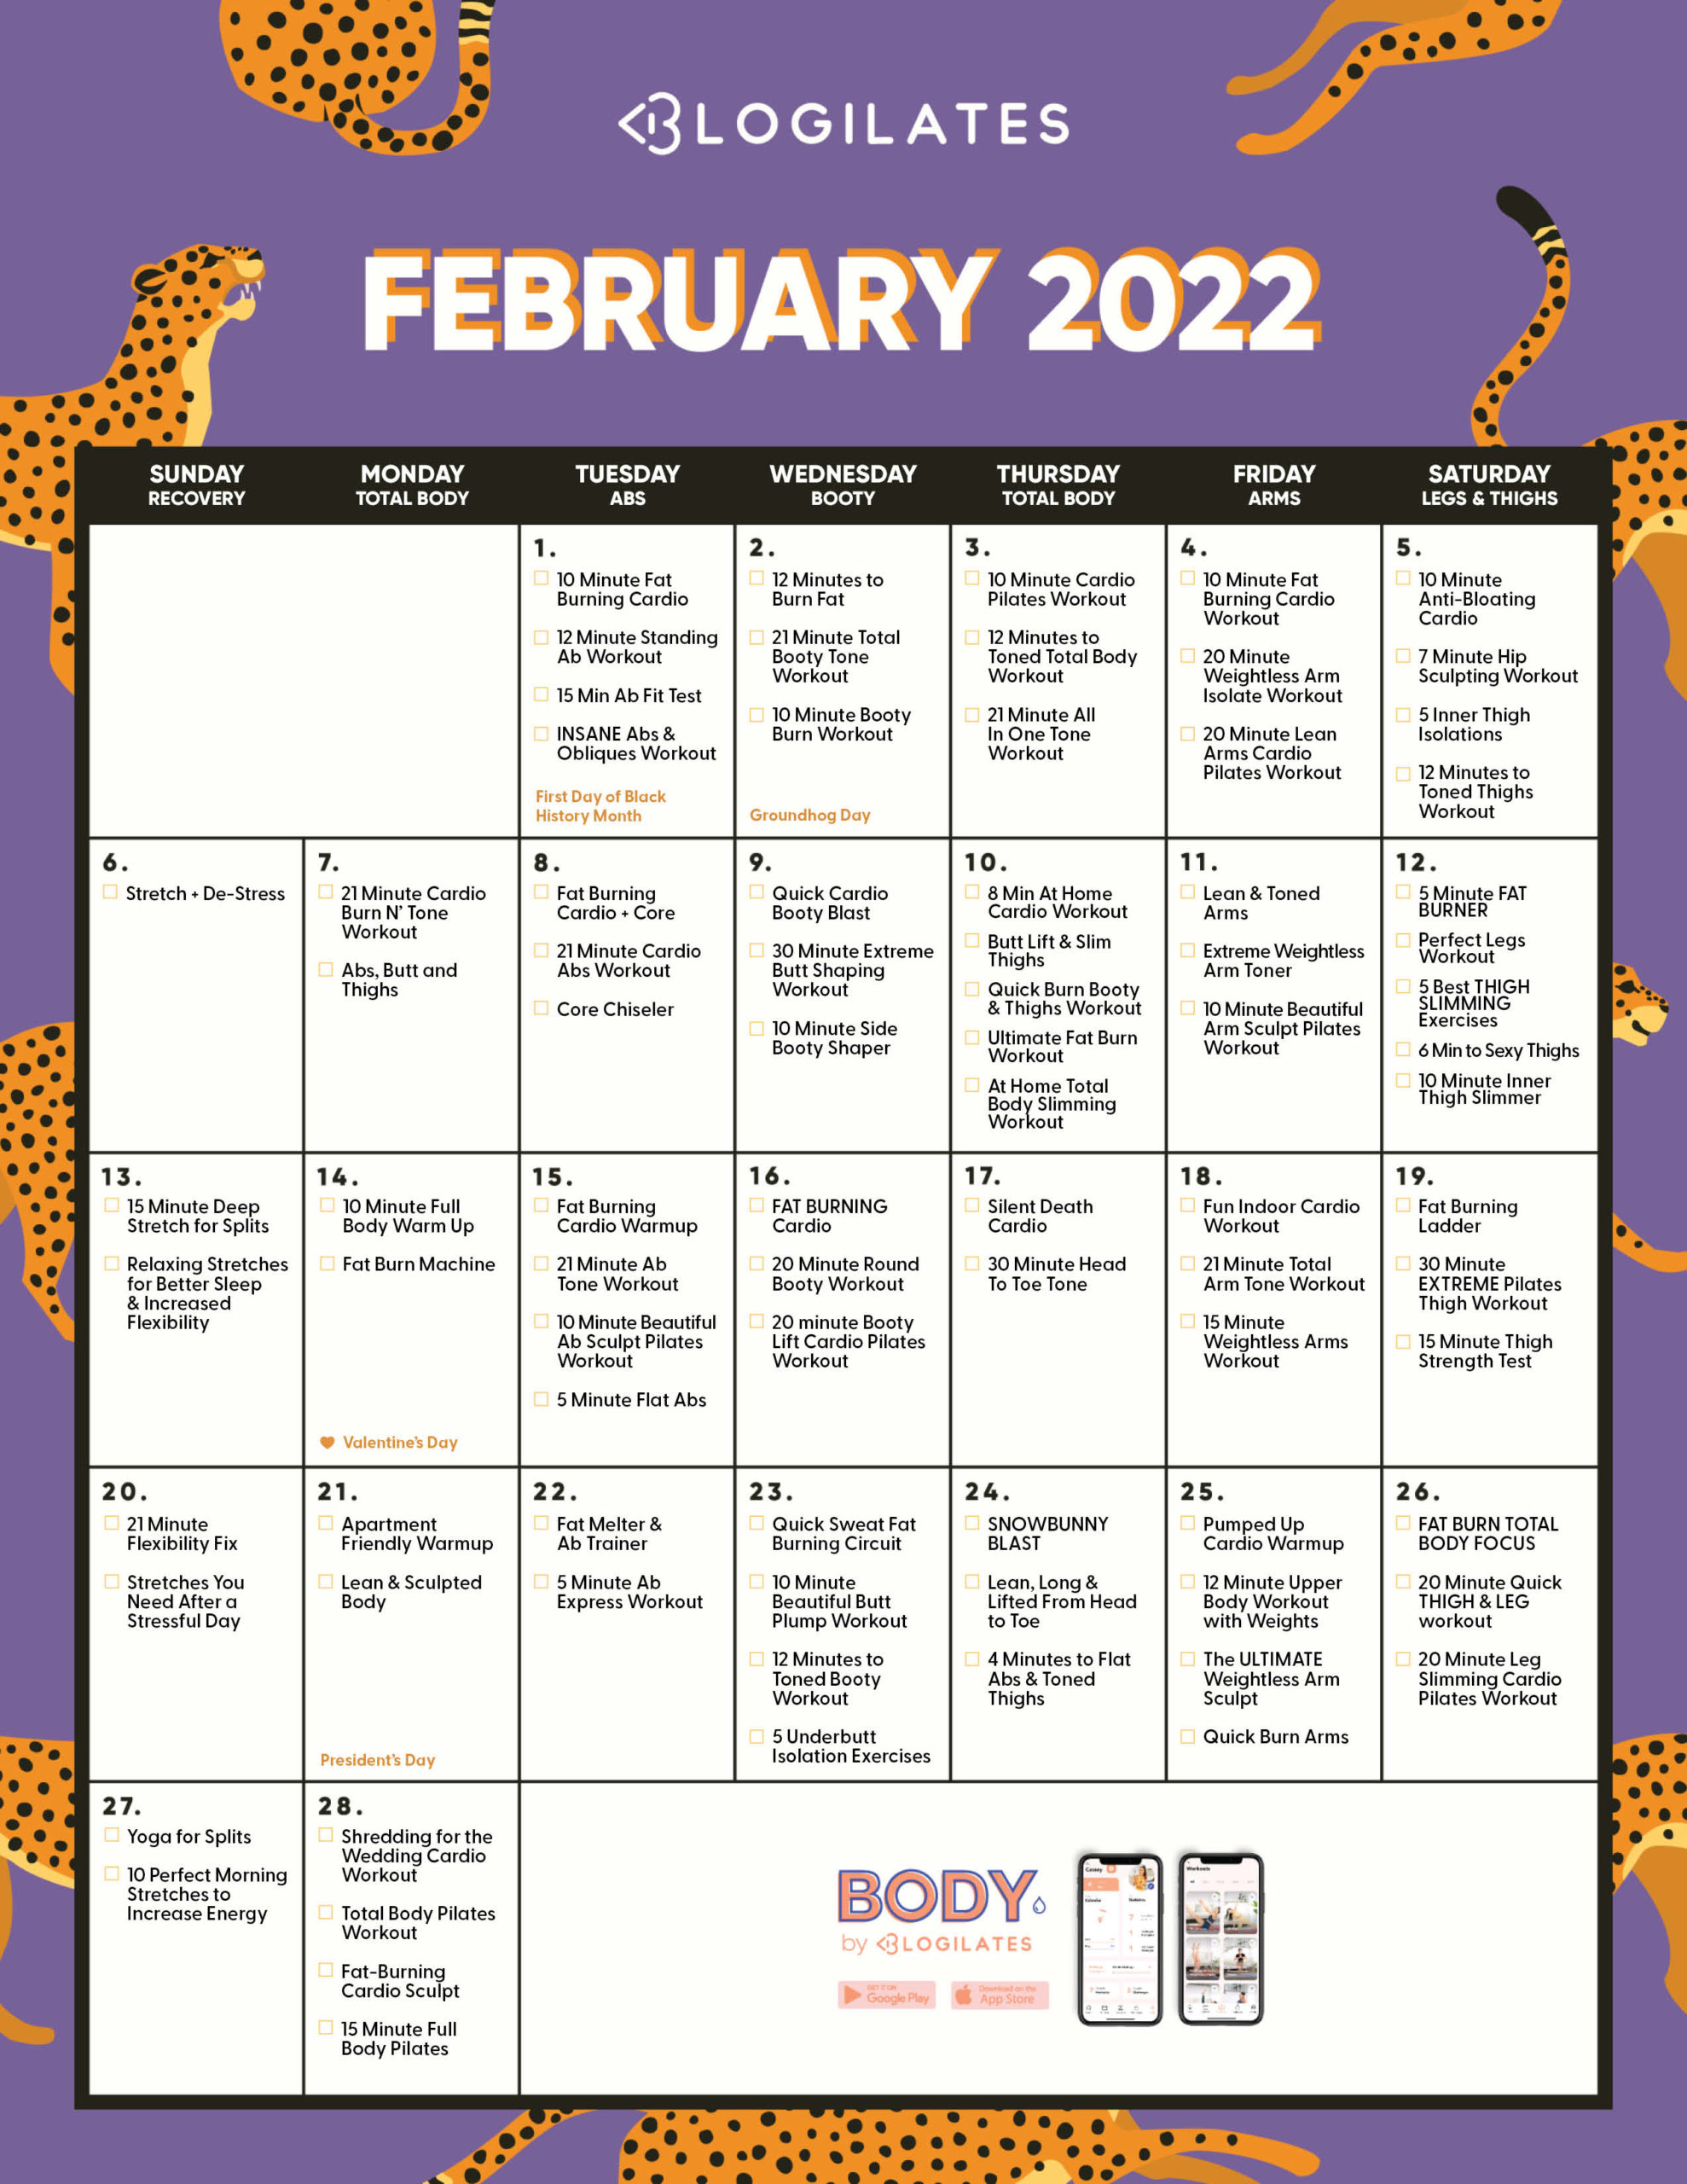 Feb 2022 Calendar The Blogilates February 2022 Workout Calendar! - Blogilates